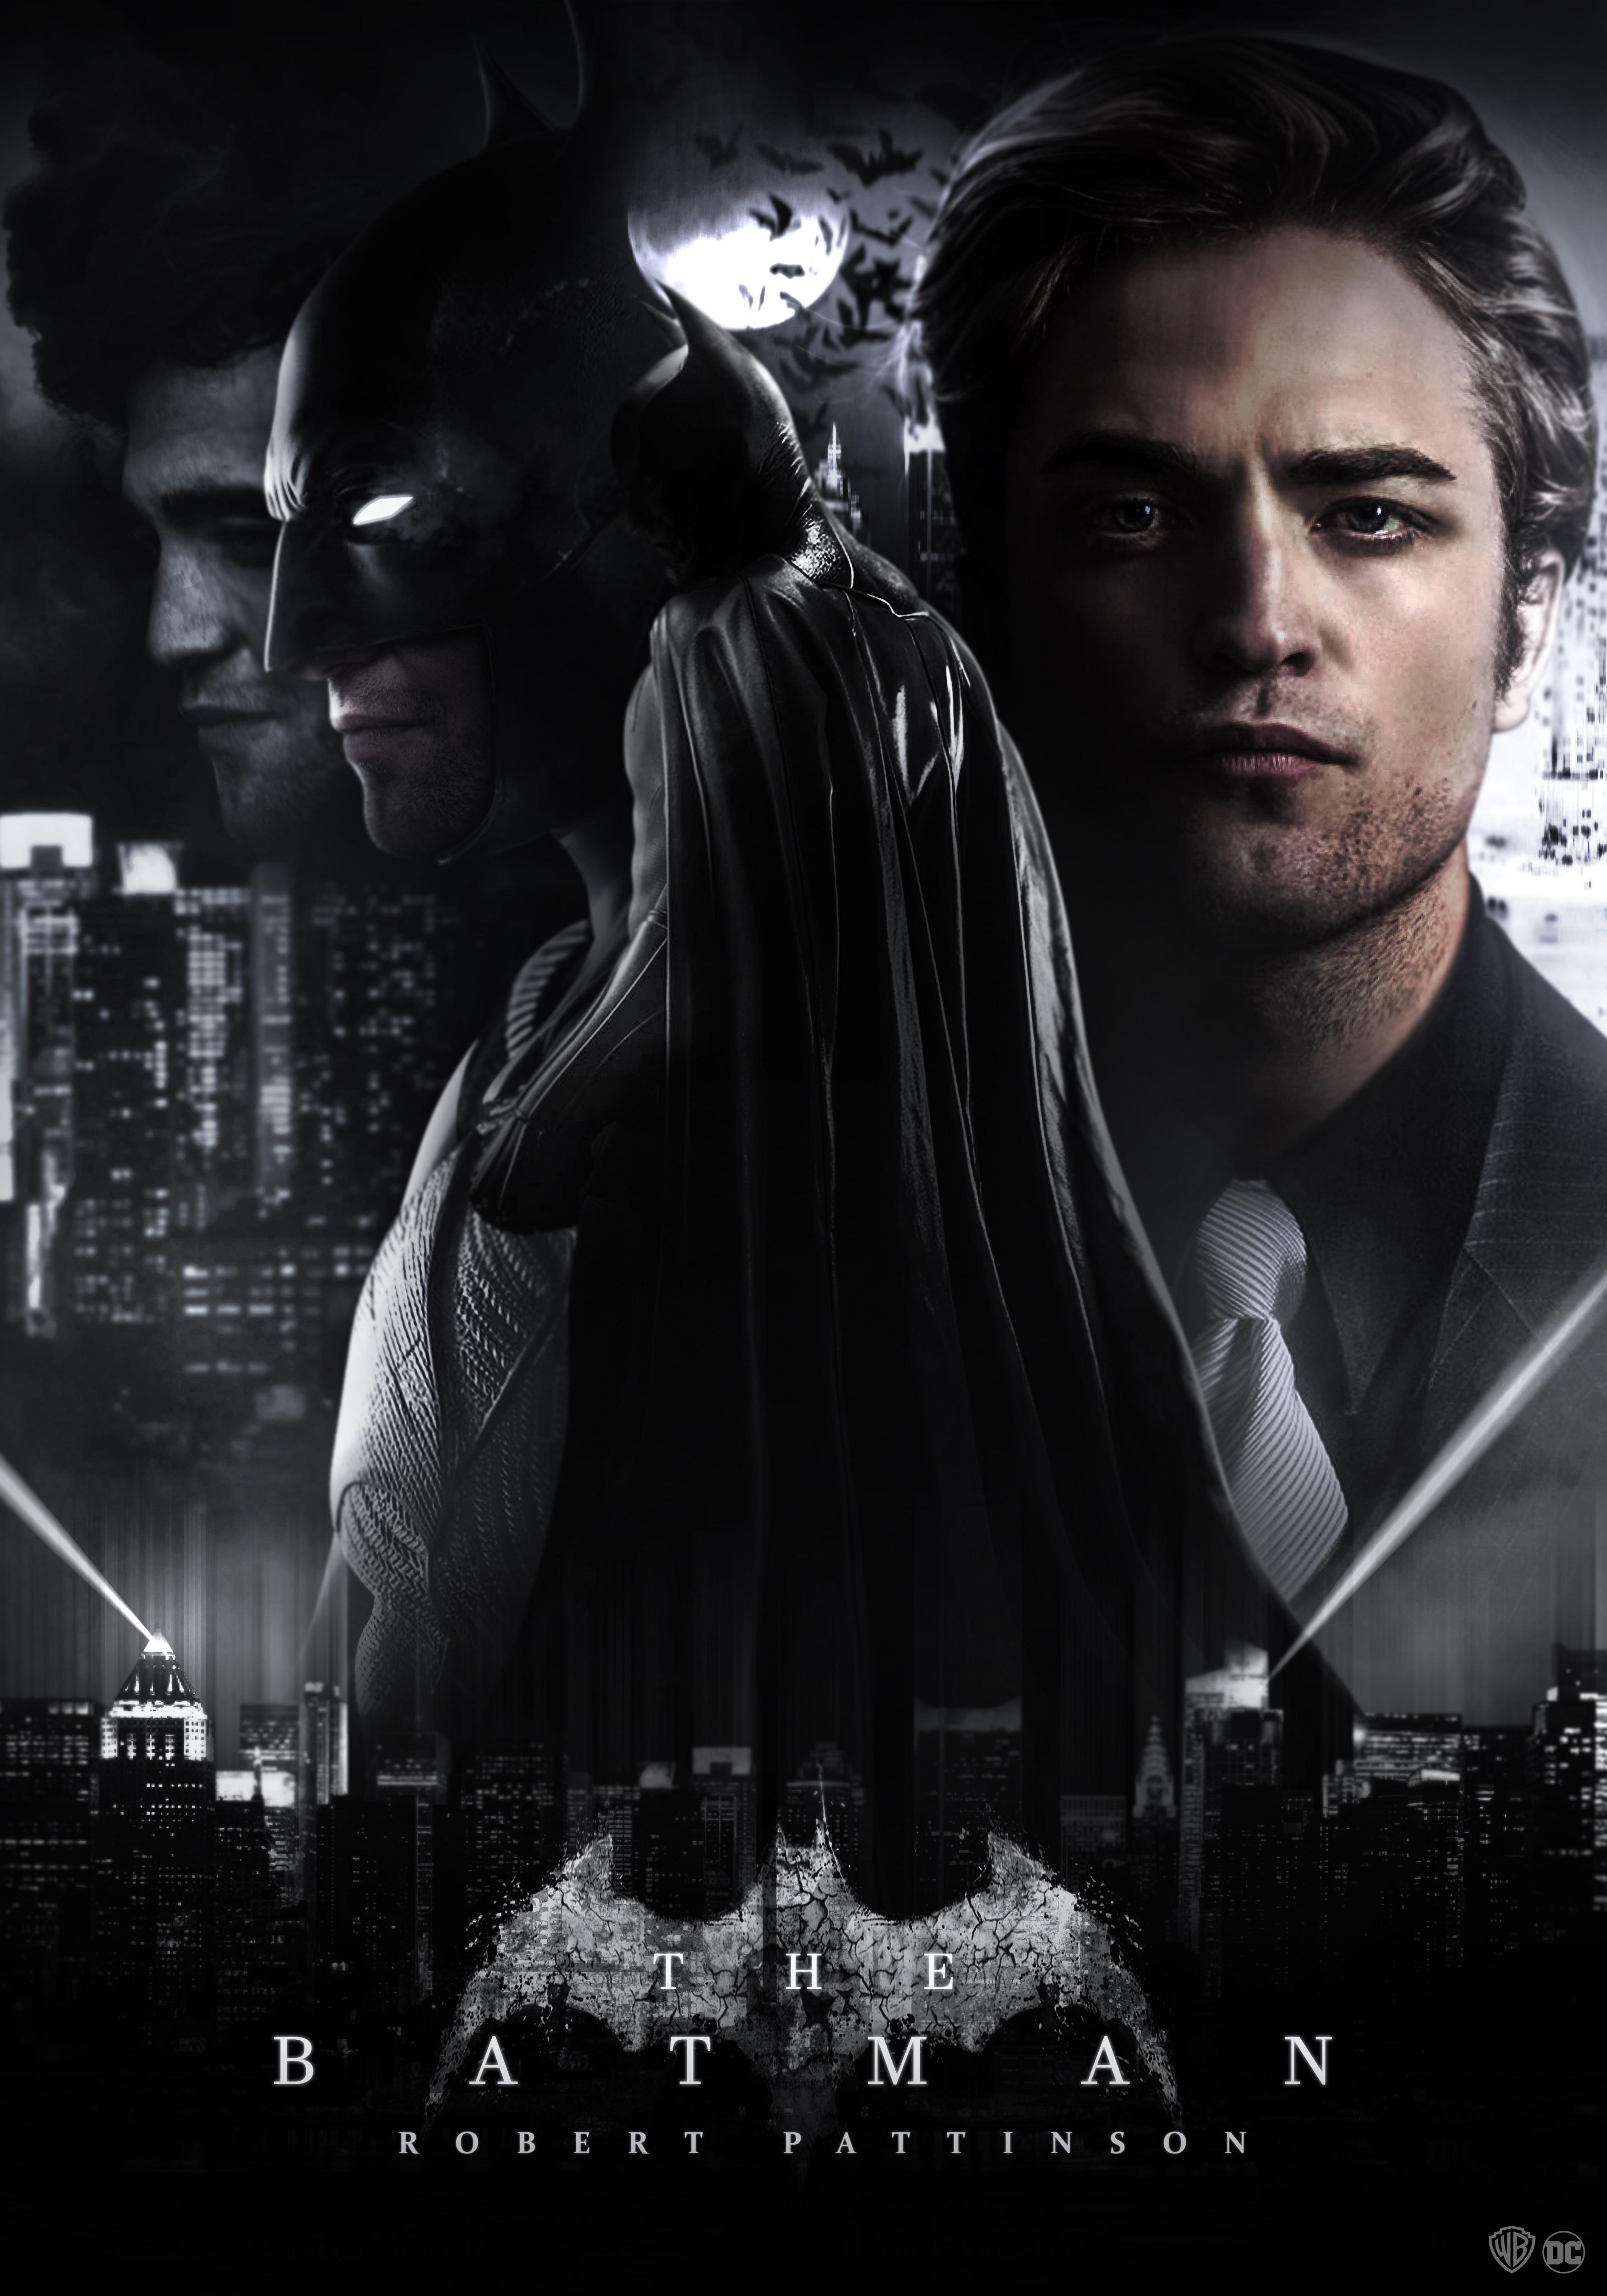 The Batman 4K Wallpaper, Robert Pattinson, 2021 Movies, DC Comics